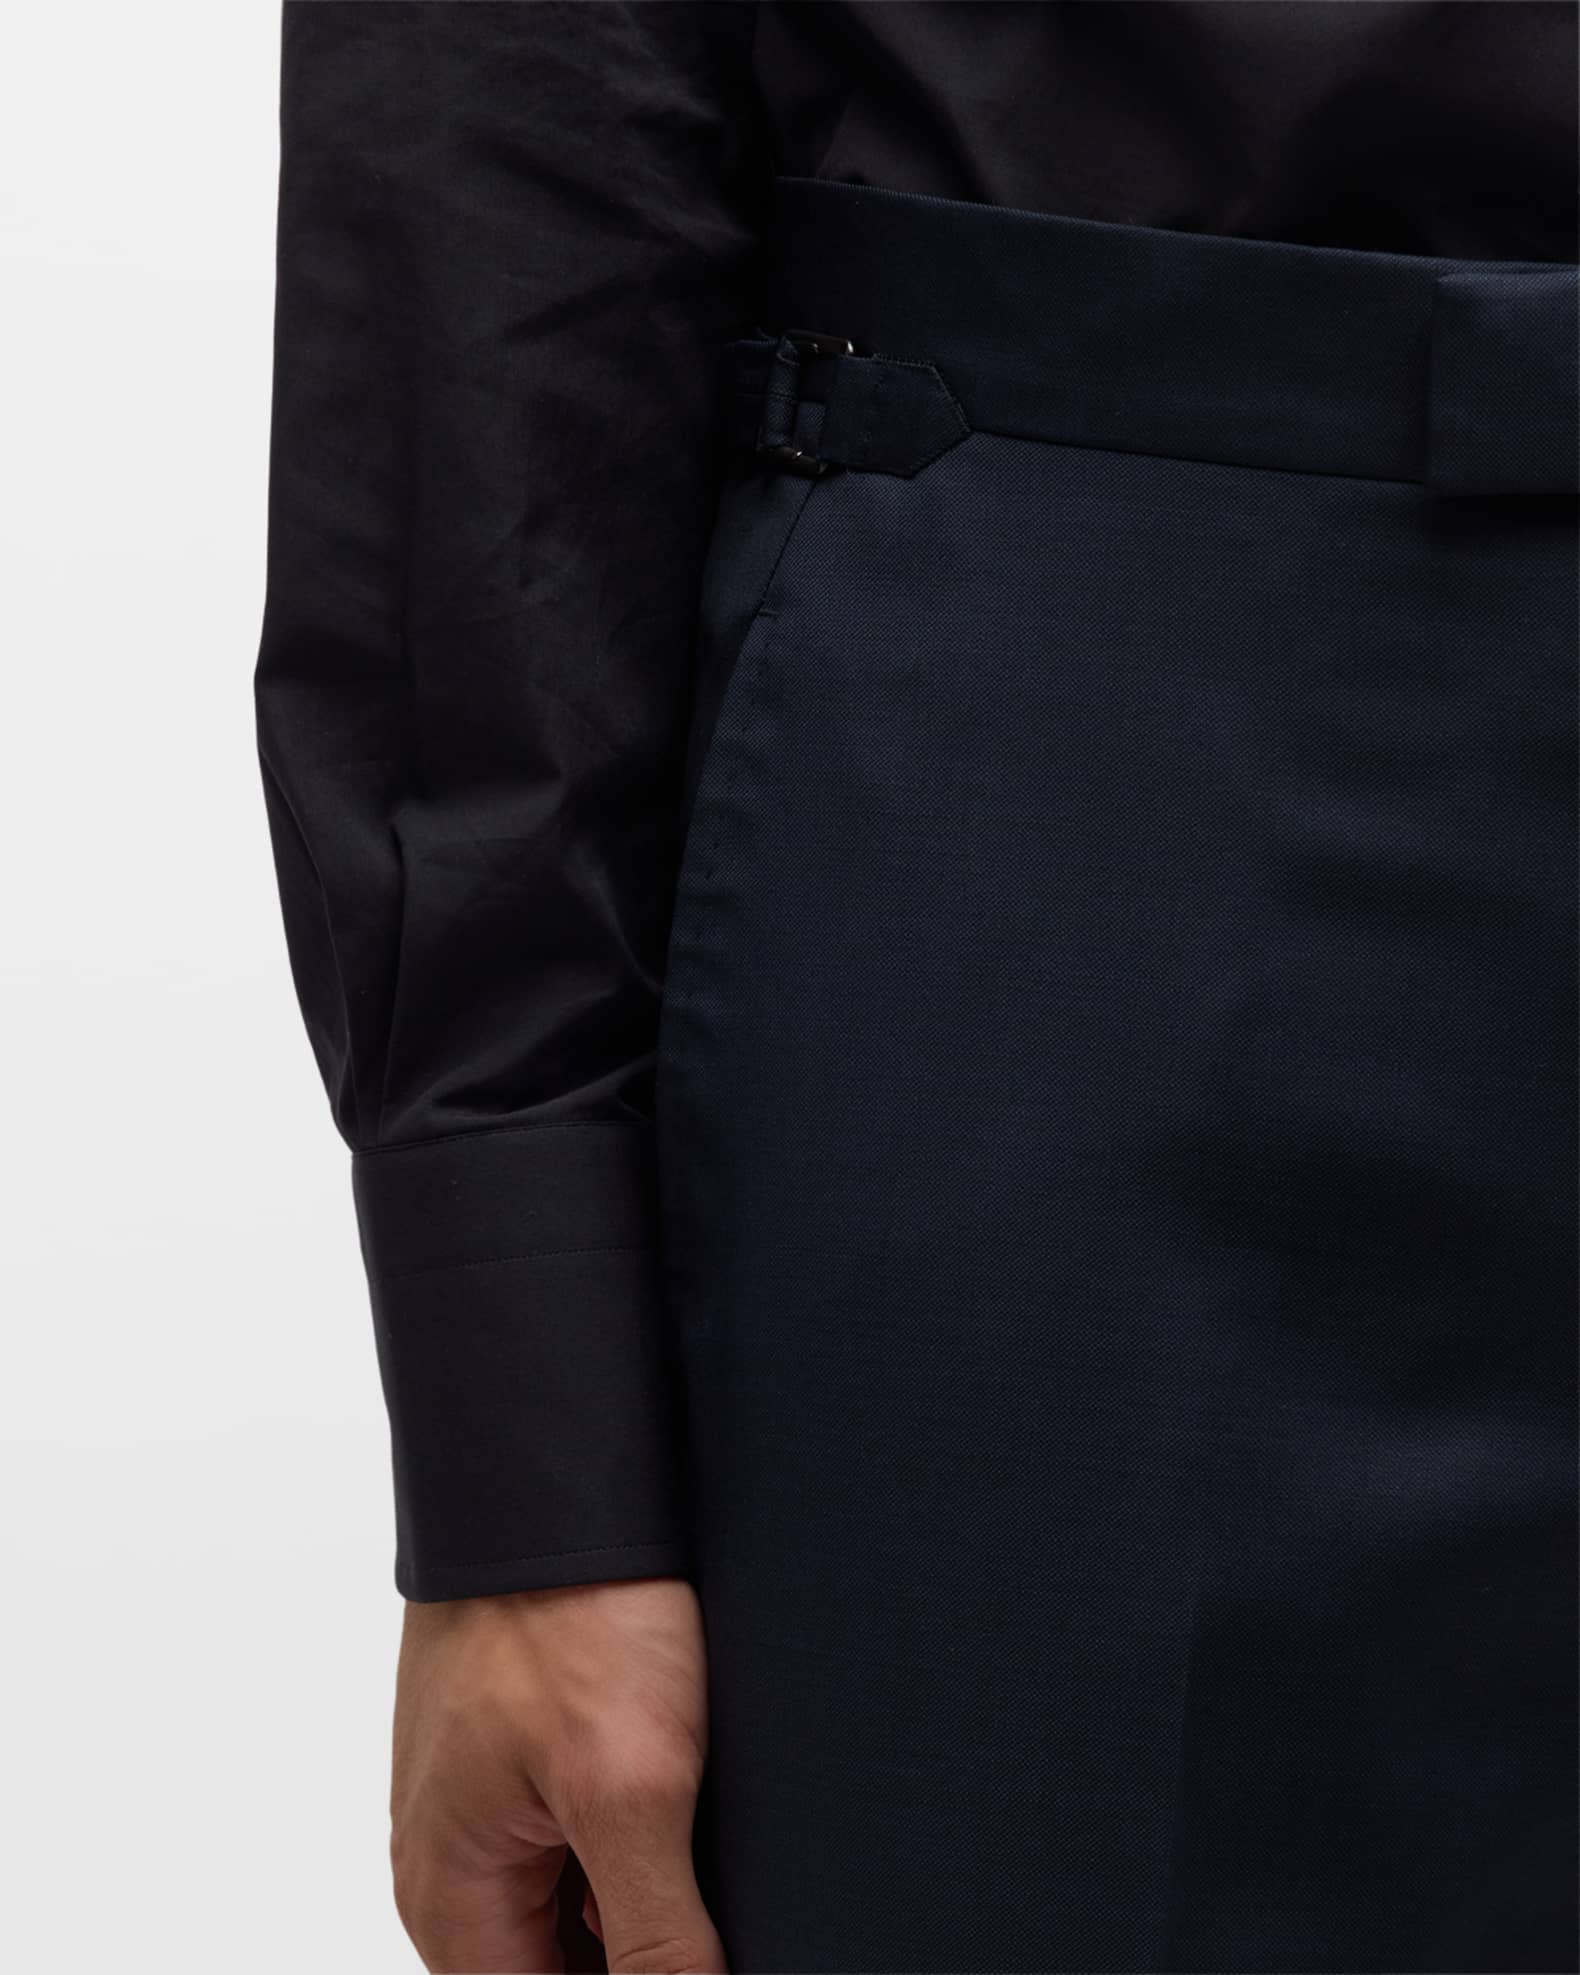 TOM FORD Men's Modern Fit Sharkskin Suit | Neiman Marcus